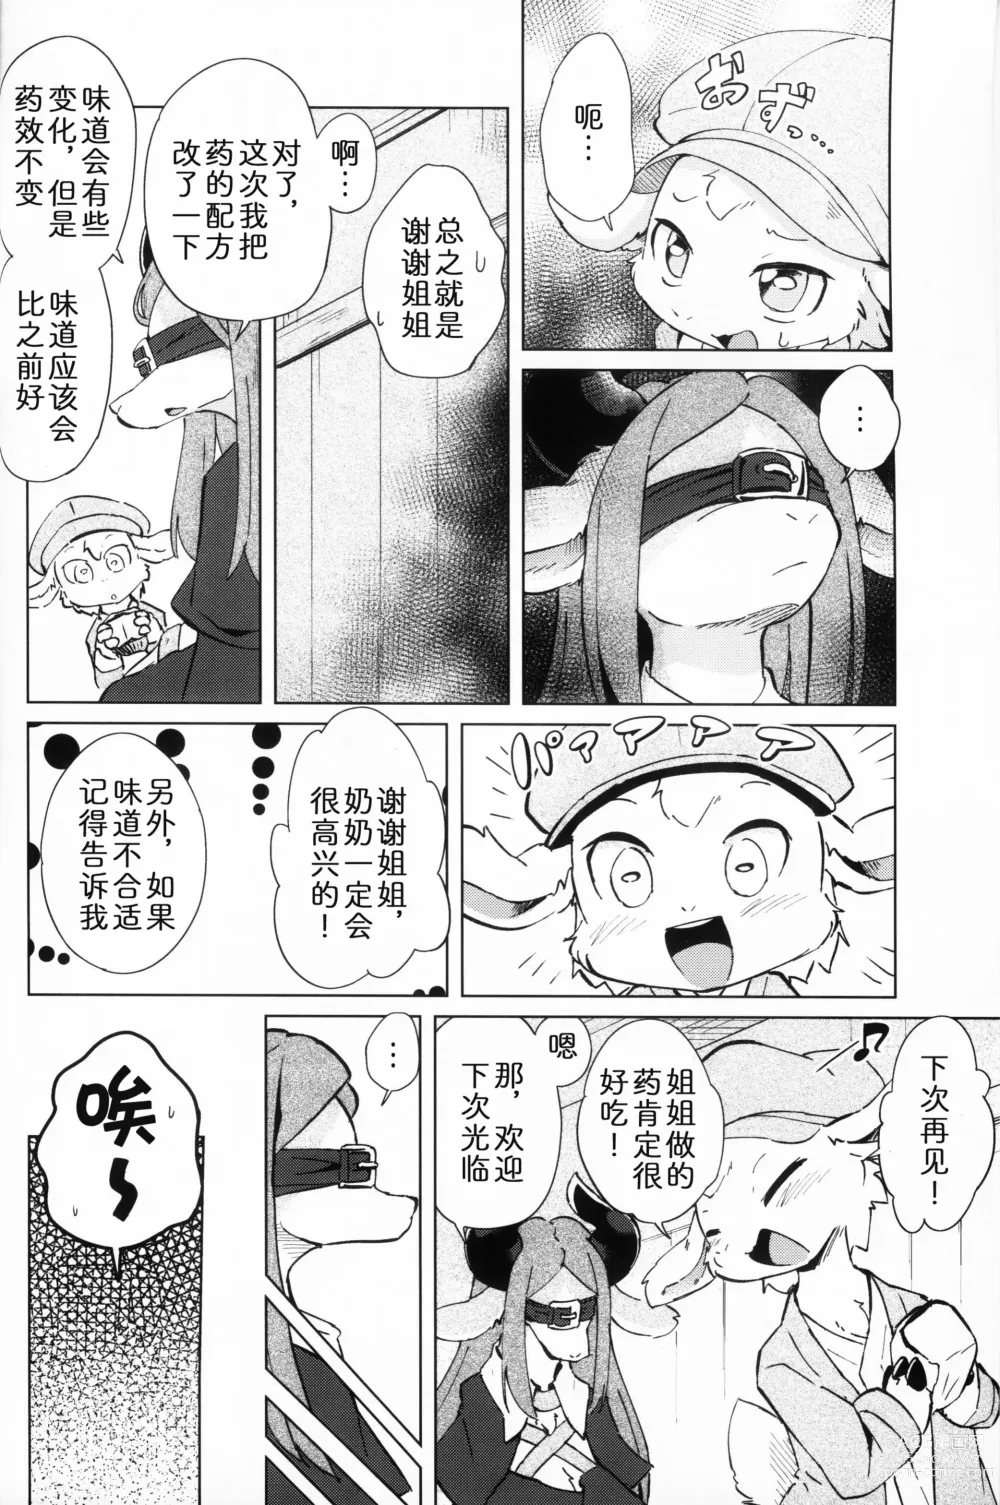 Page 3 of doujinshi 内向好色的莫诺小姐